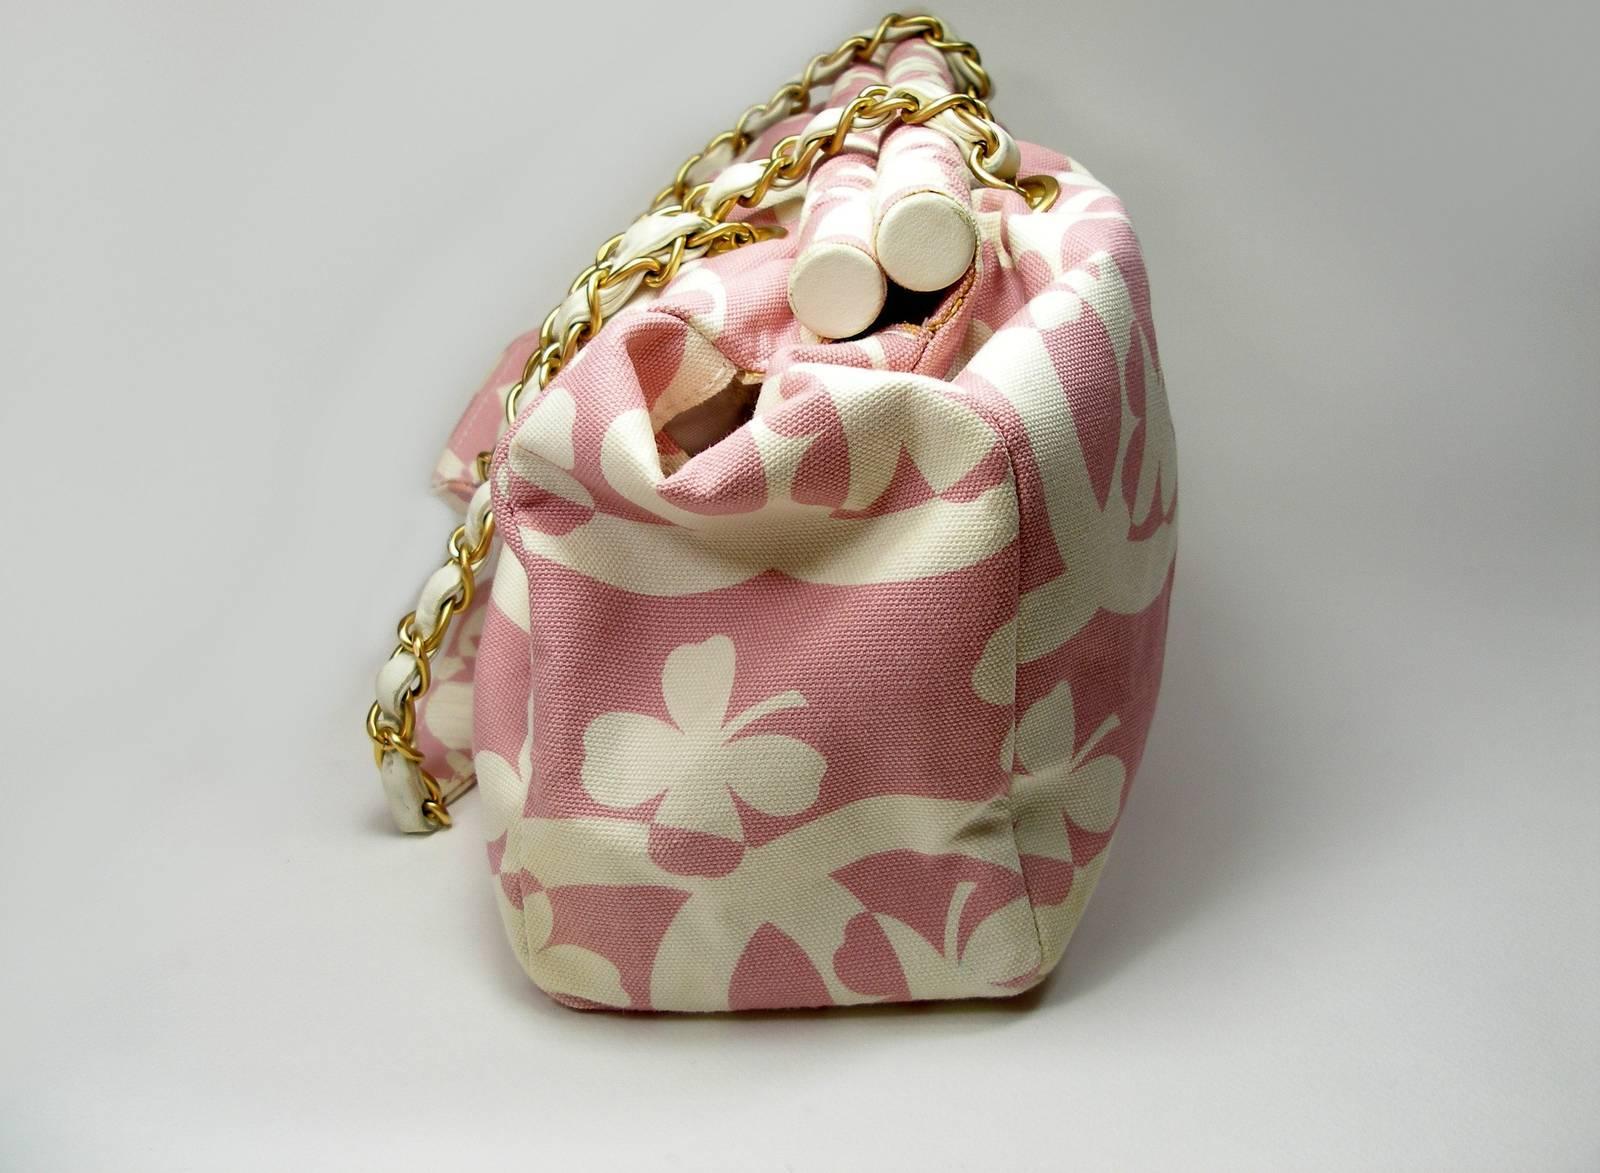  Summer 2004 Chanel Vintage CHANEL Clover chain shoulder bag Pink / Ecru XL Size In Good Condition In VERGT, FR